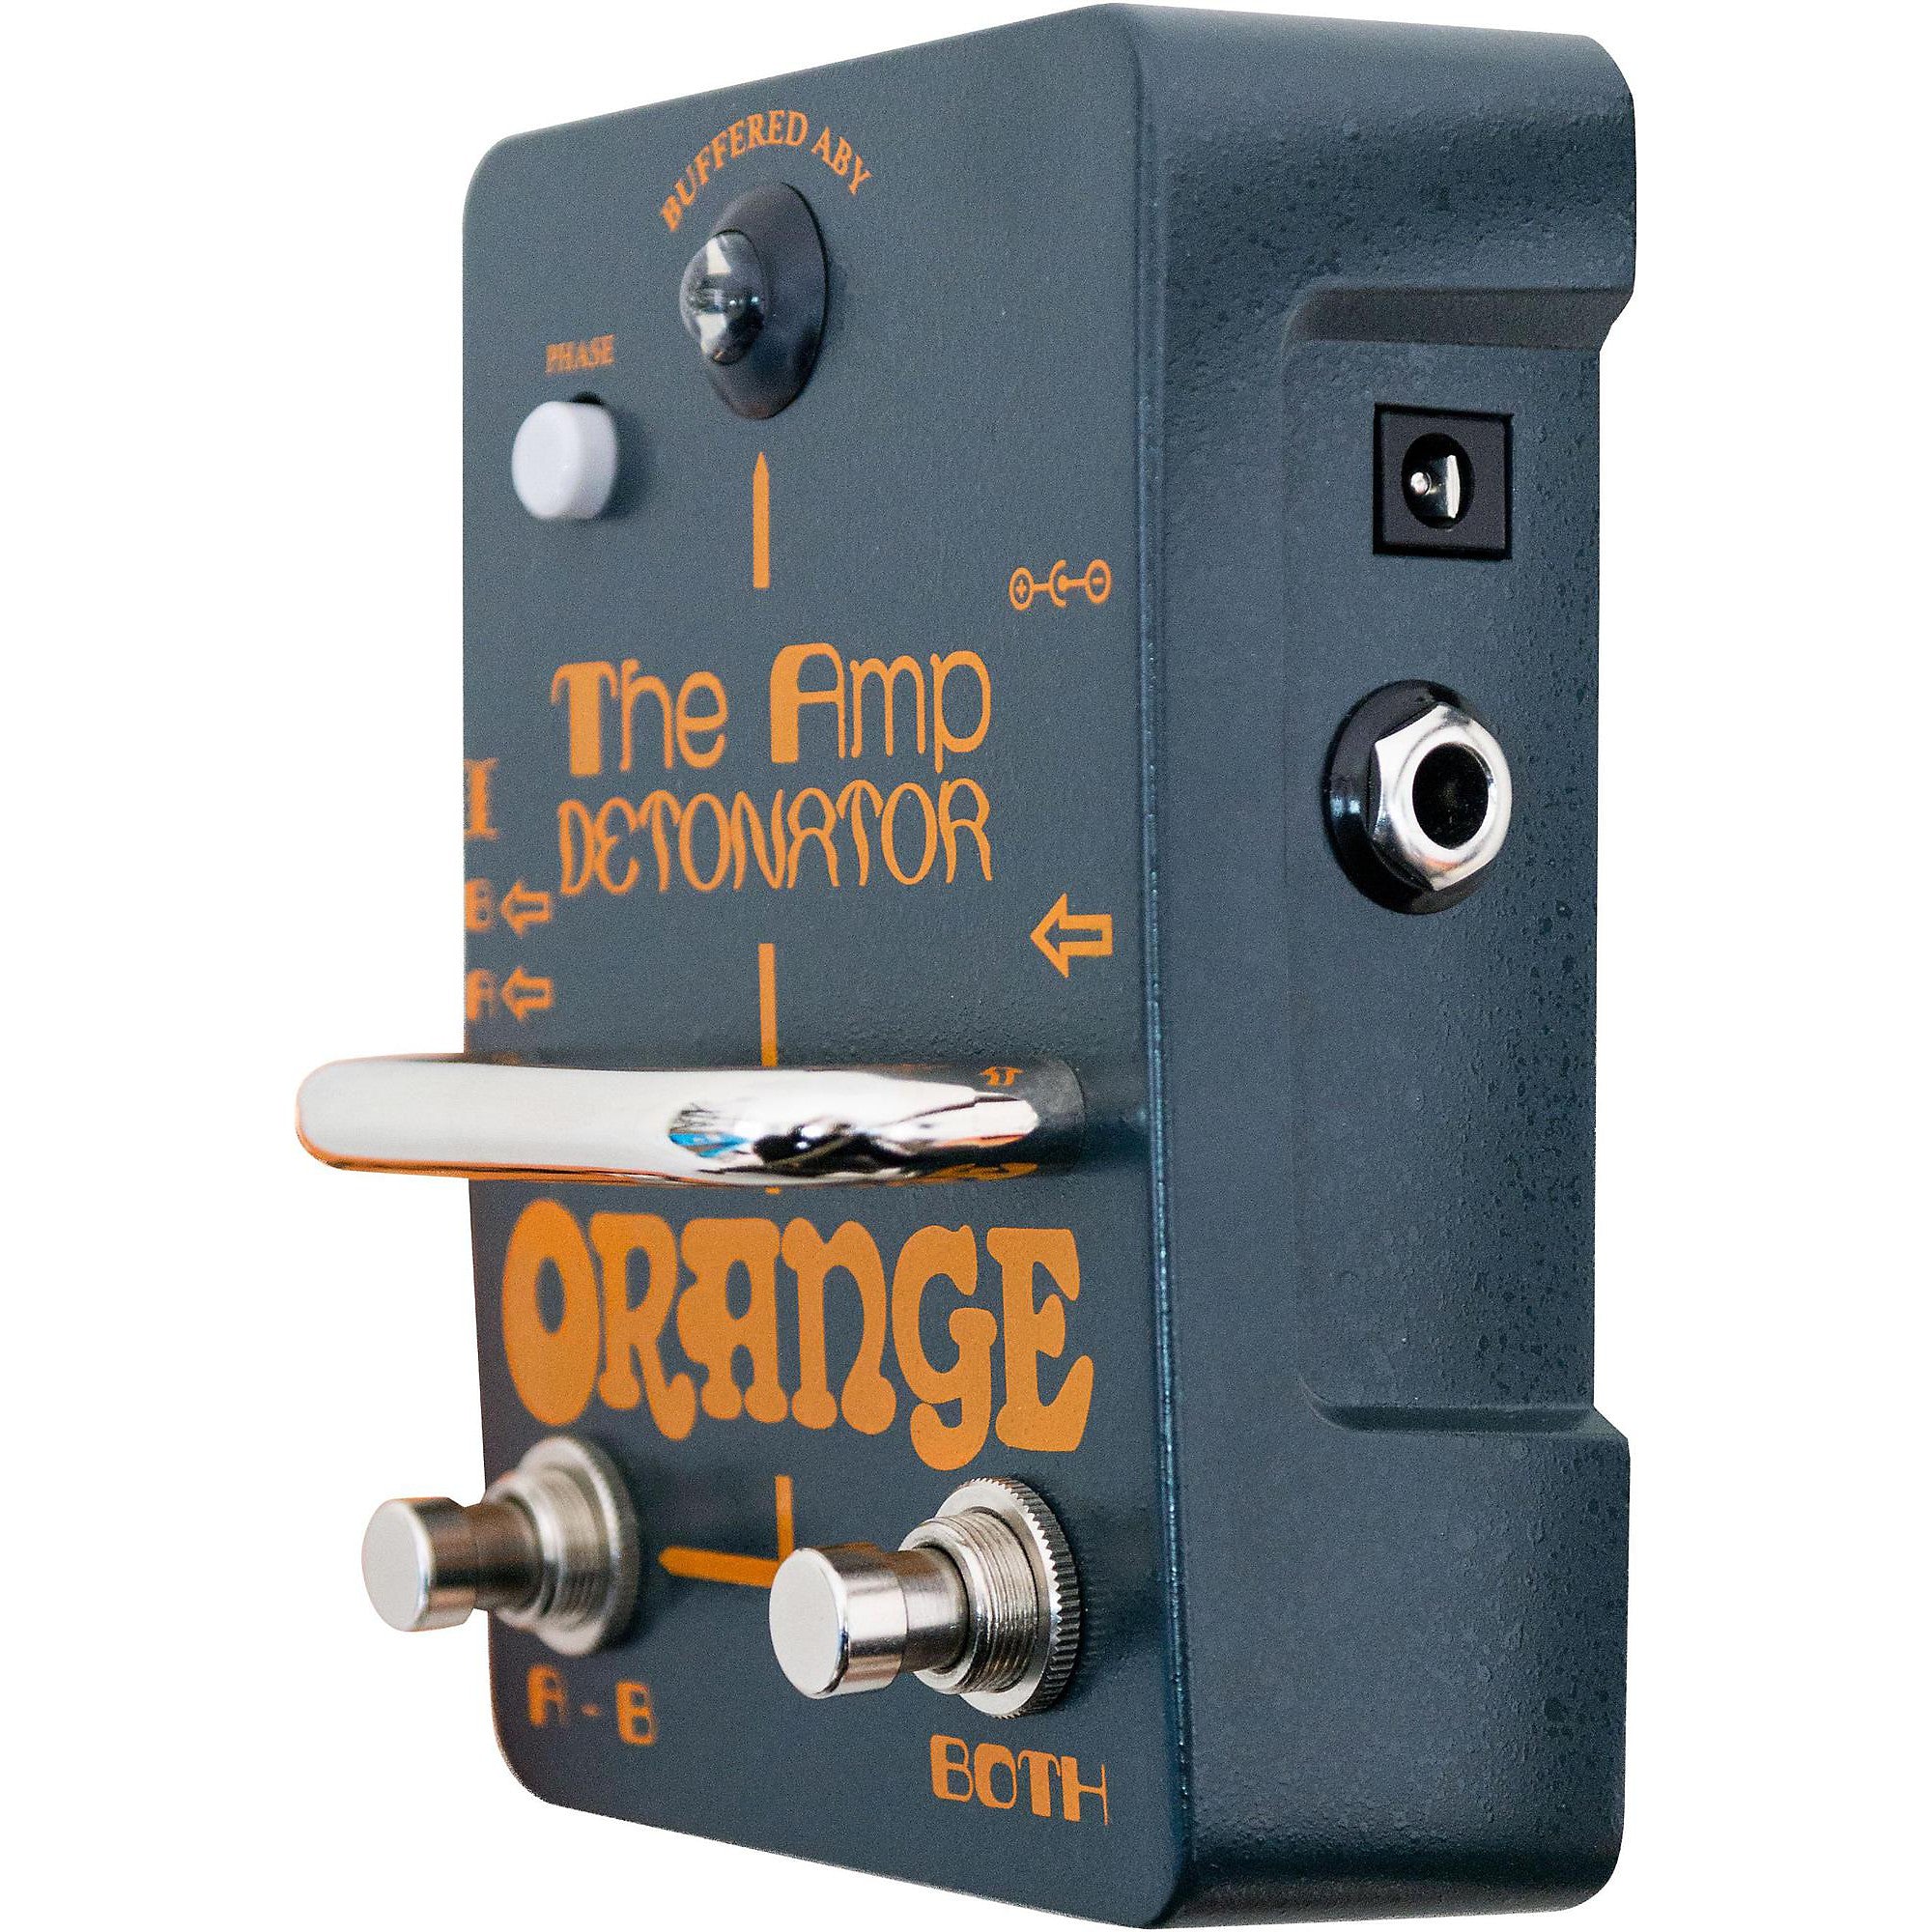 Orange Amplifiers Amp-Detonator ABY Amp Switcher Guitar Pedal